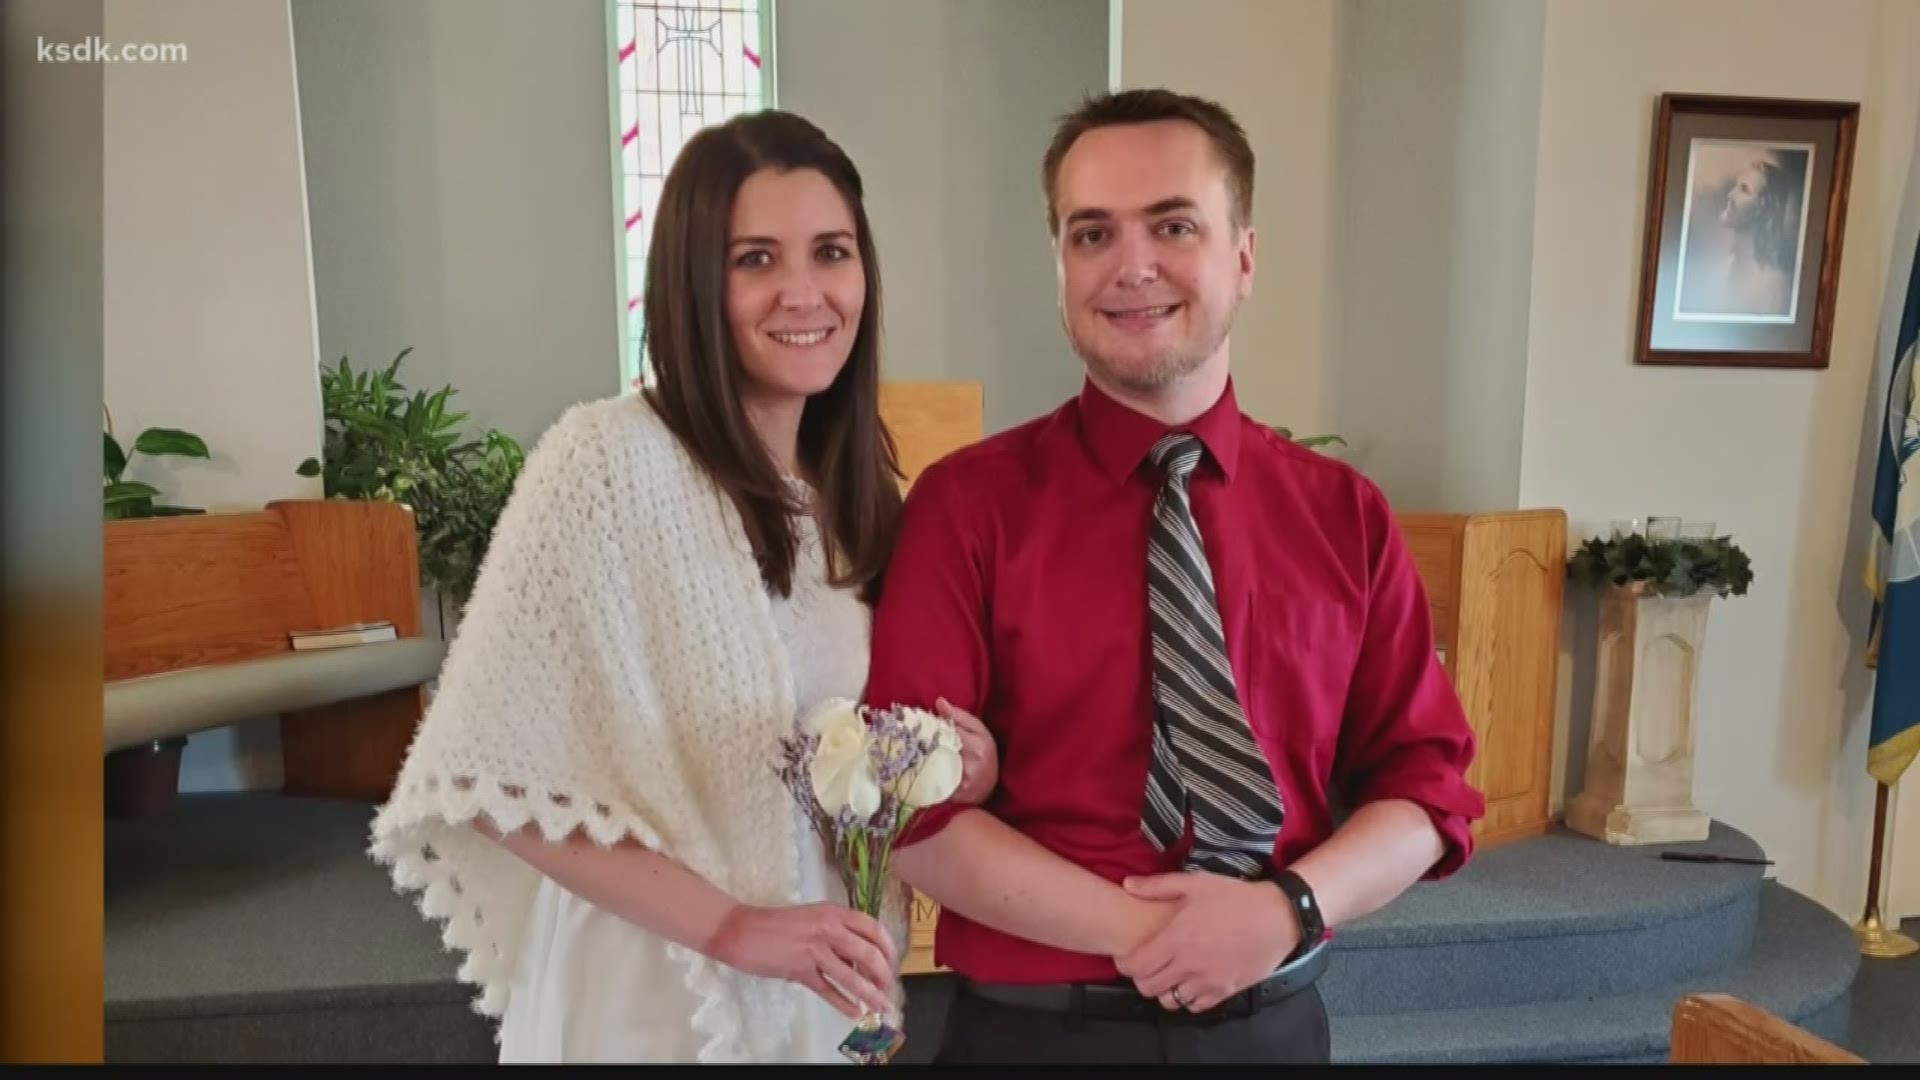 When coronavirus threatened their wedding plans, Andrew and Cassidy Dayton got creative